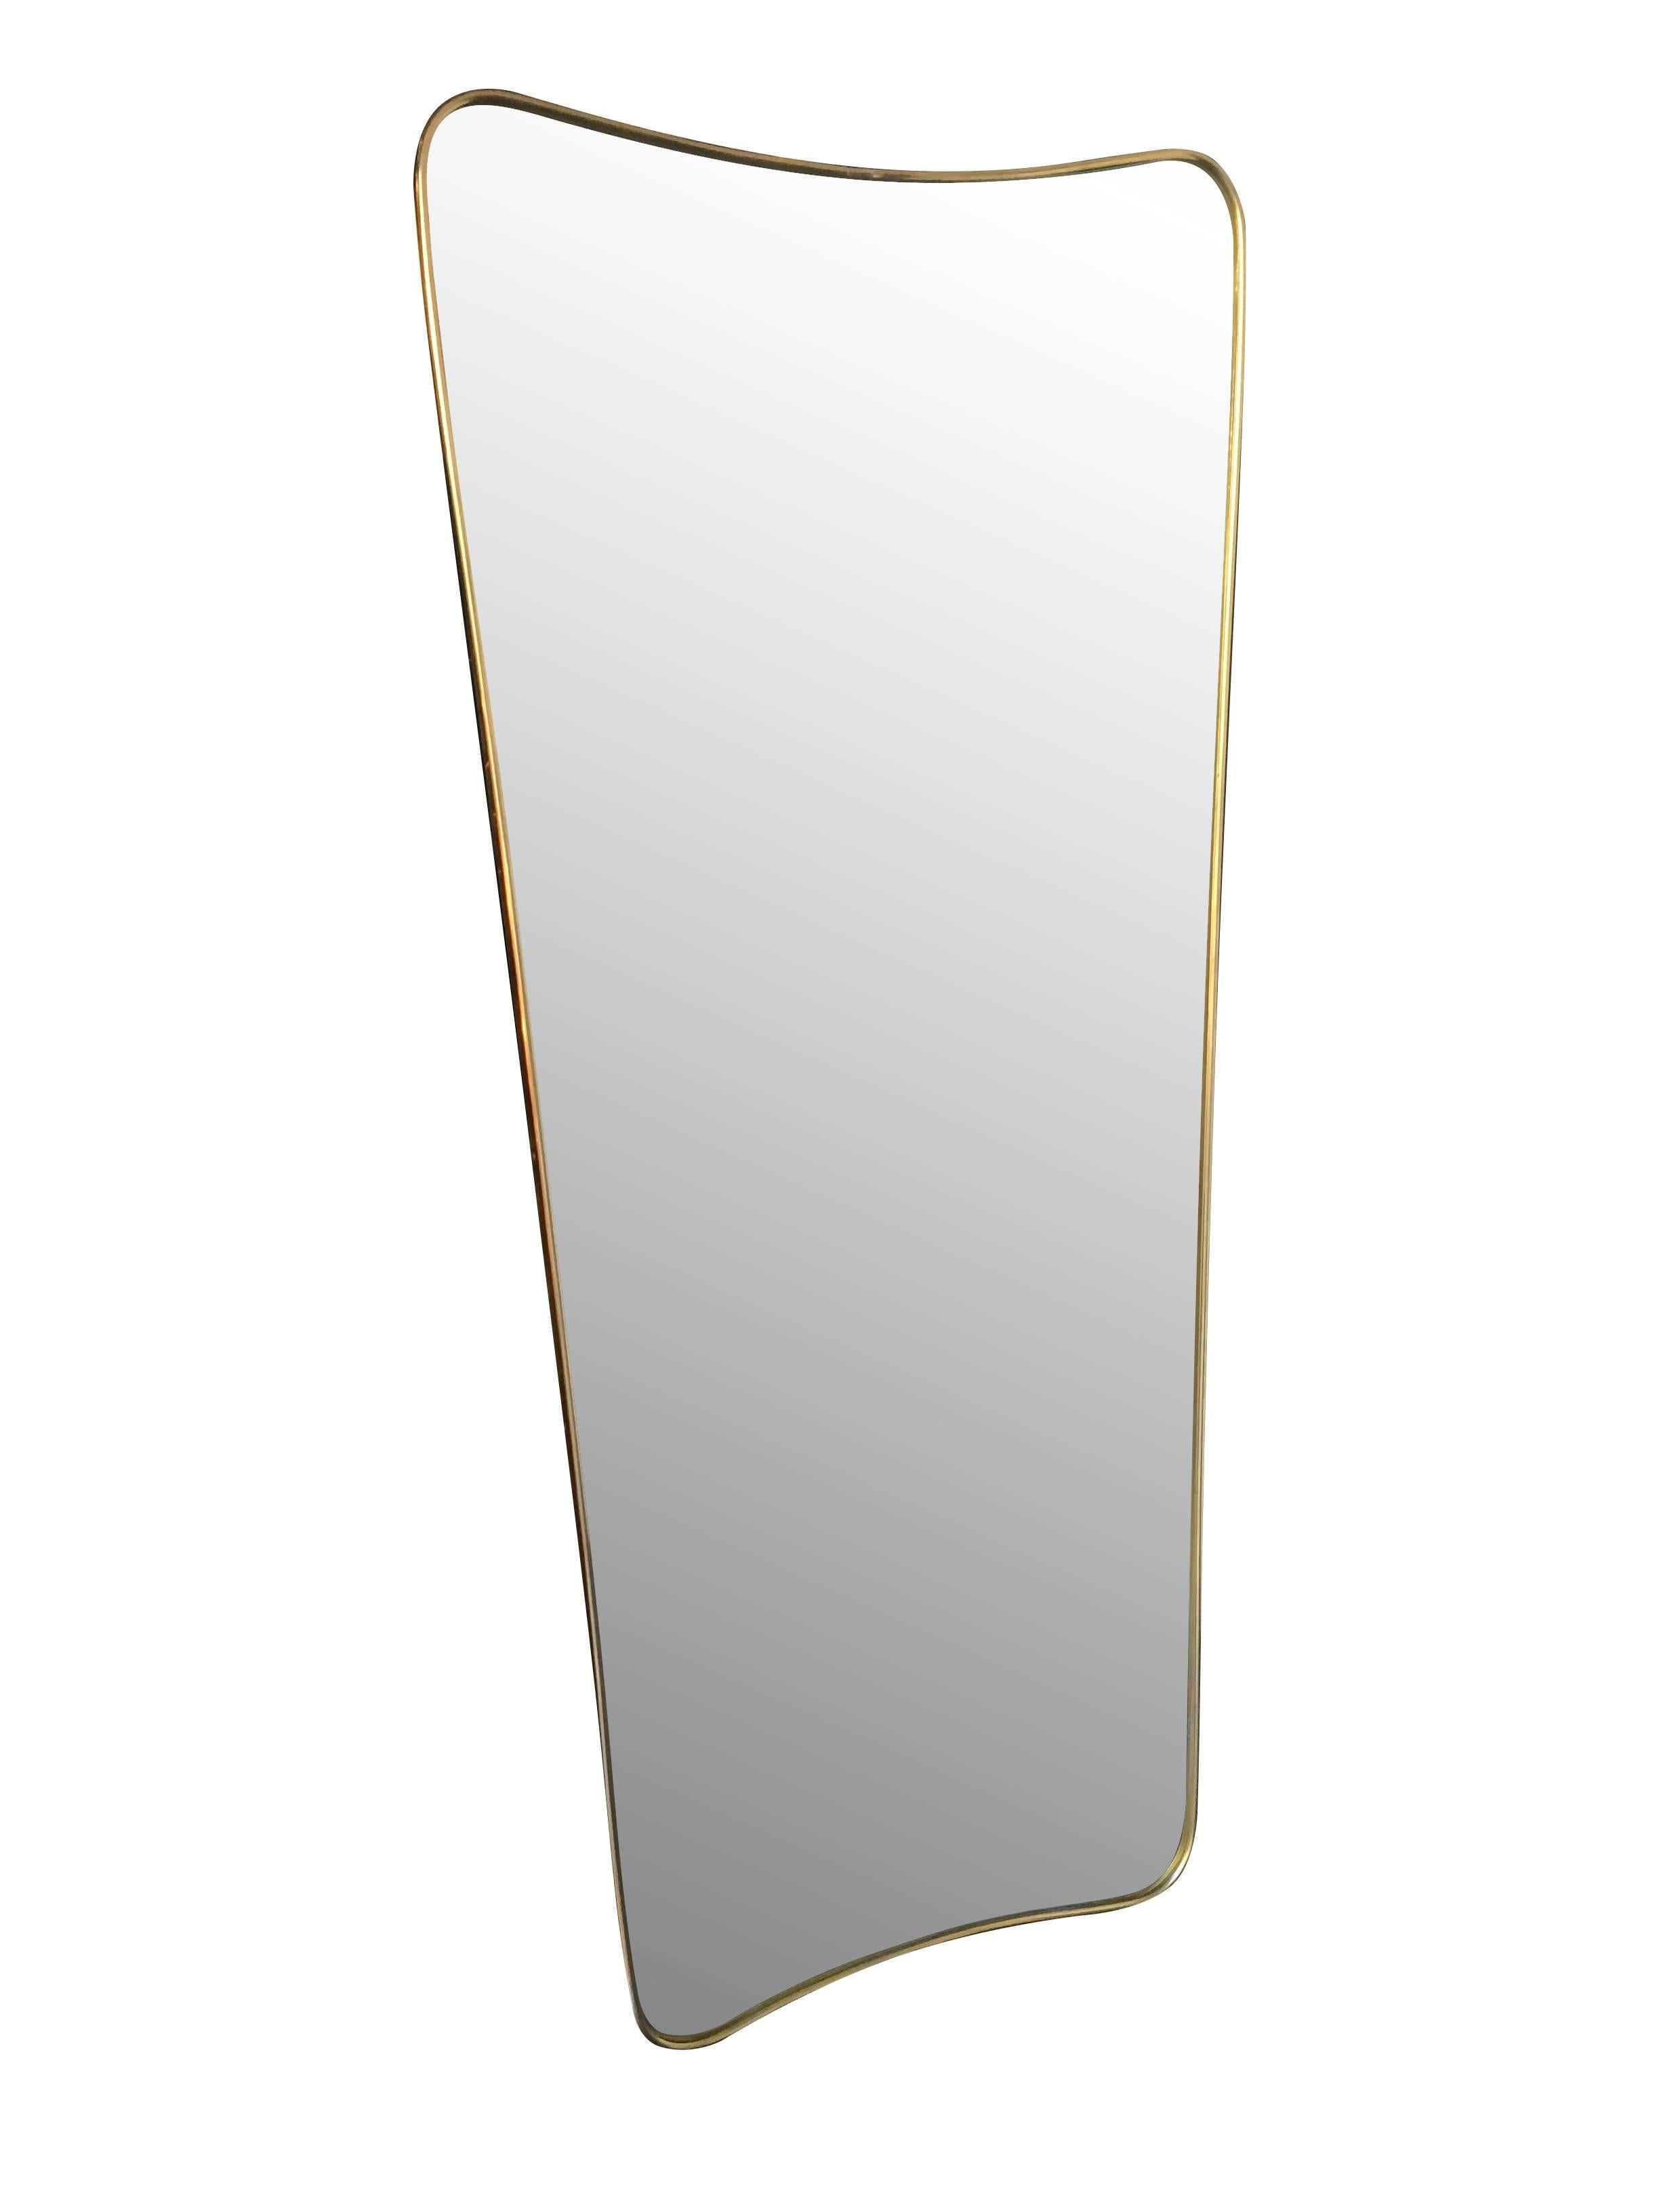 Contemporary Medium Italian Shield Mirror With Brass Surround In The Style Of Gio Ponti